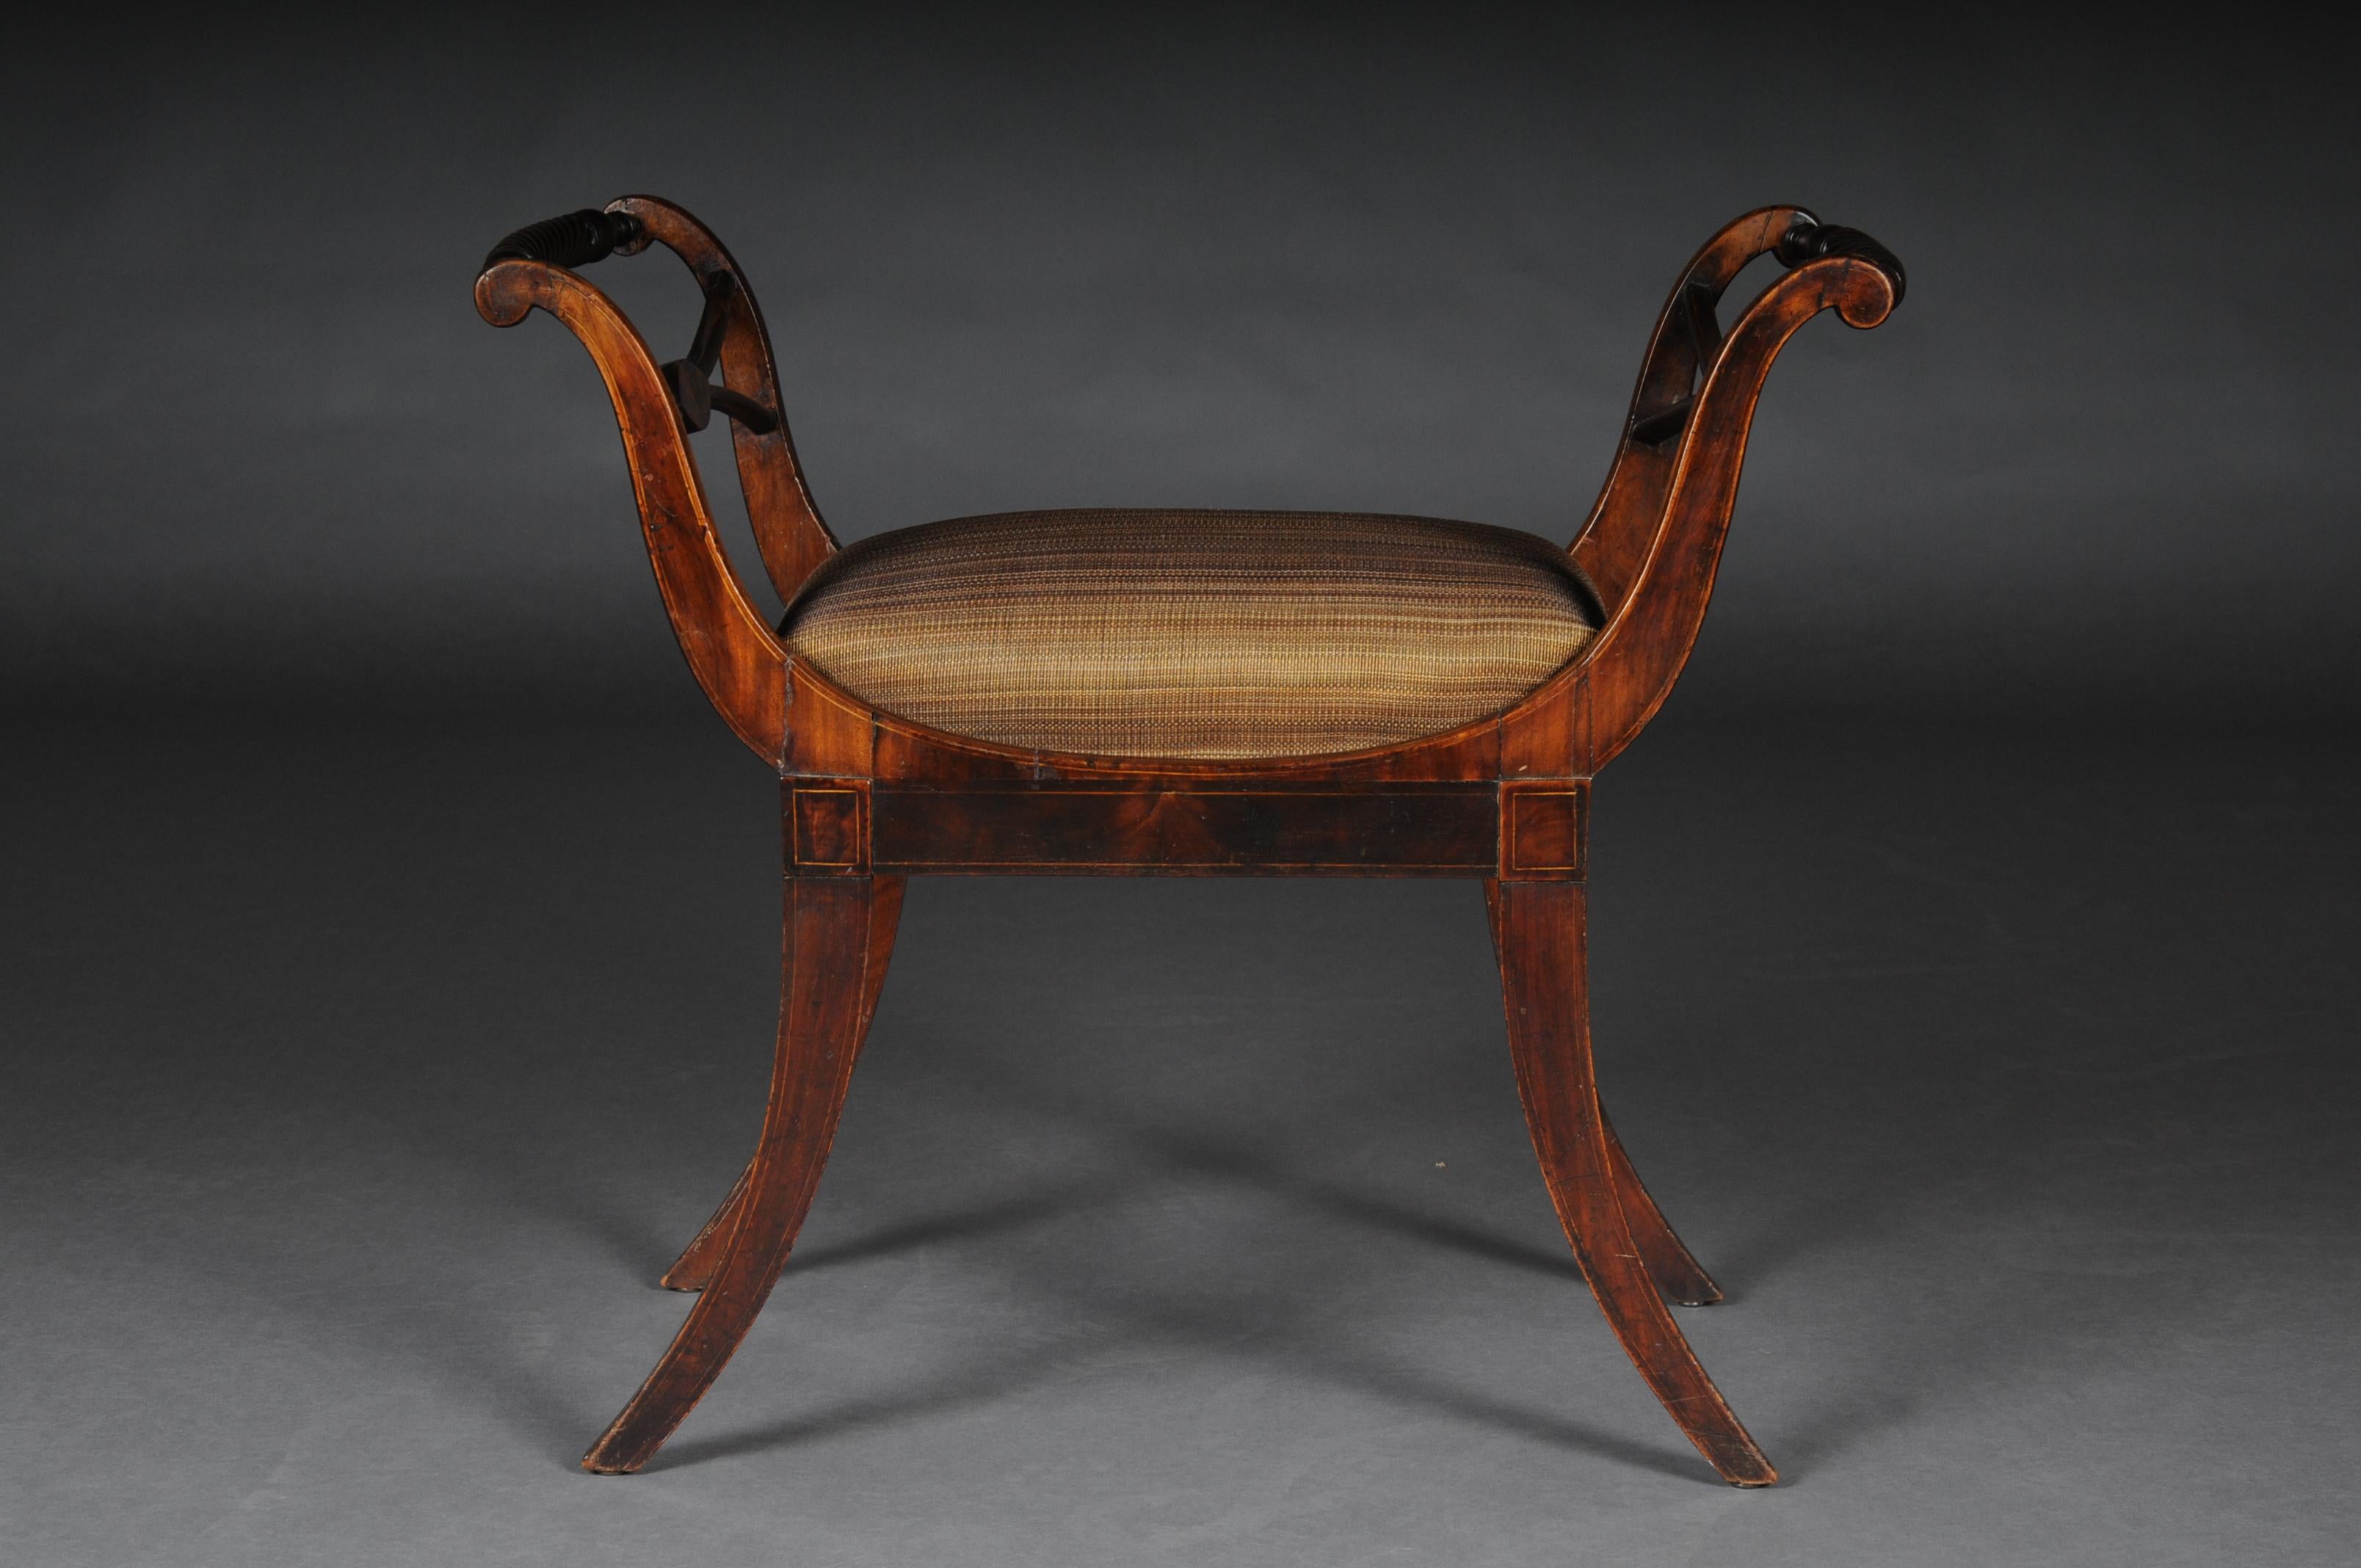 Antike Biedermeier Gondel / Hocker um 1820, Rosshaar.

Mahagoni-Quadrate auf Massivholz. Klassischer abnehmbarer Sitz, der mit Rosshaar gepolstert ist.

(B - 156).
 